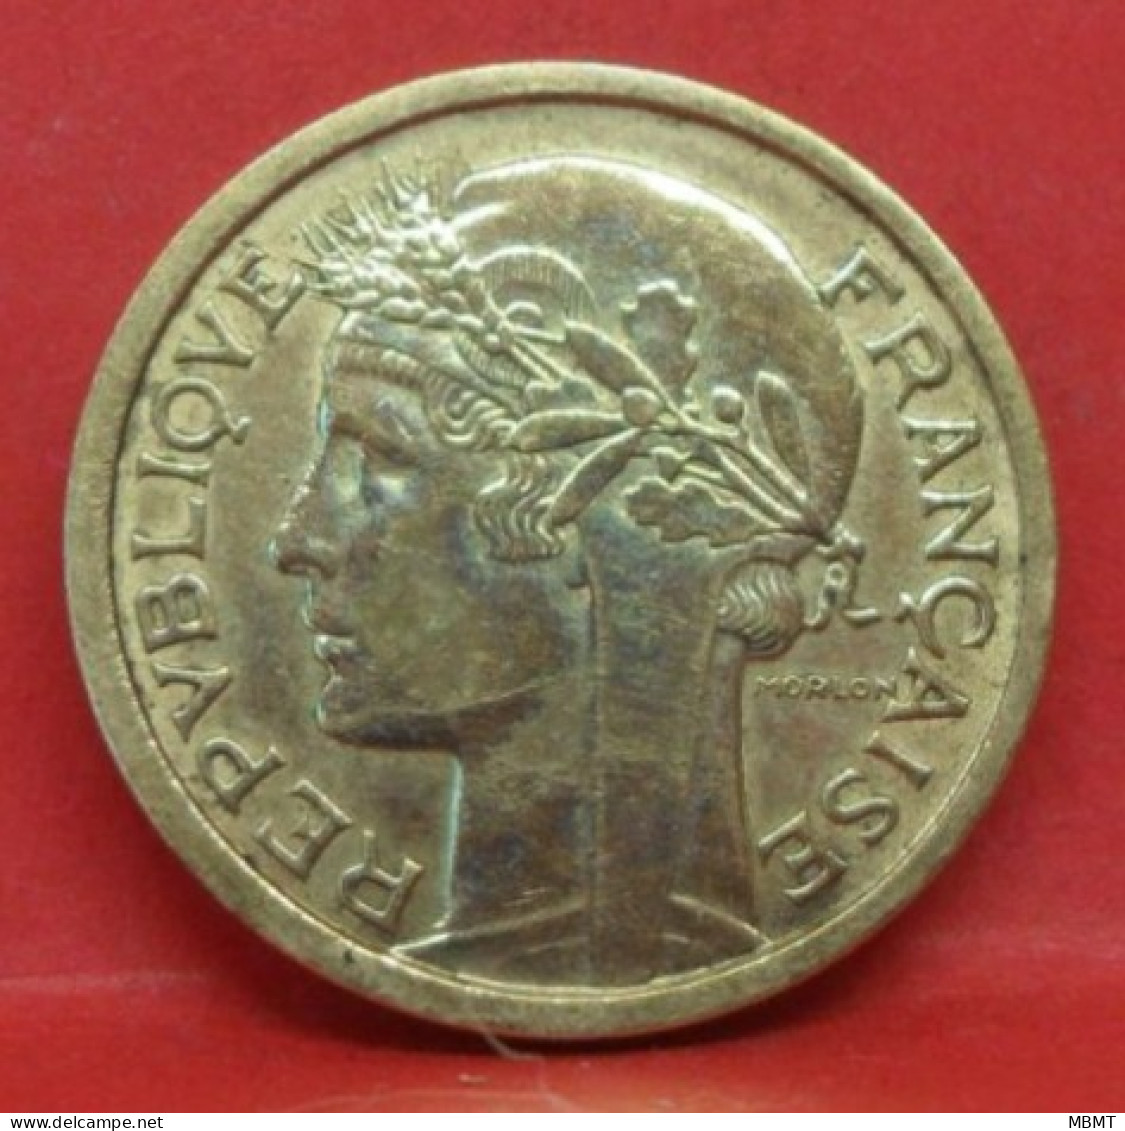 1 Franc Morlon 1941 - SUP - Pièce Monnaie France - Article N°1077 - 1 Franc